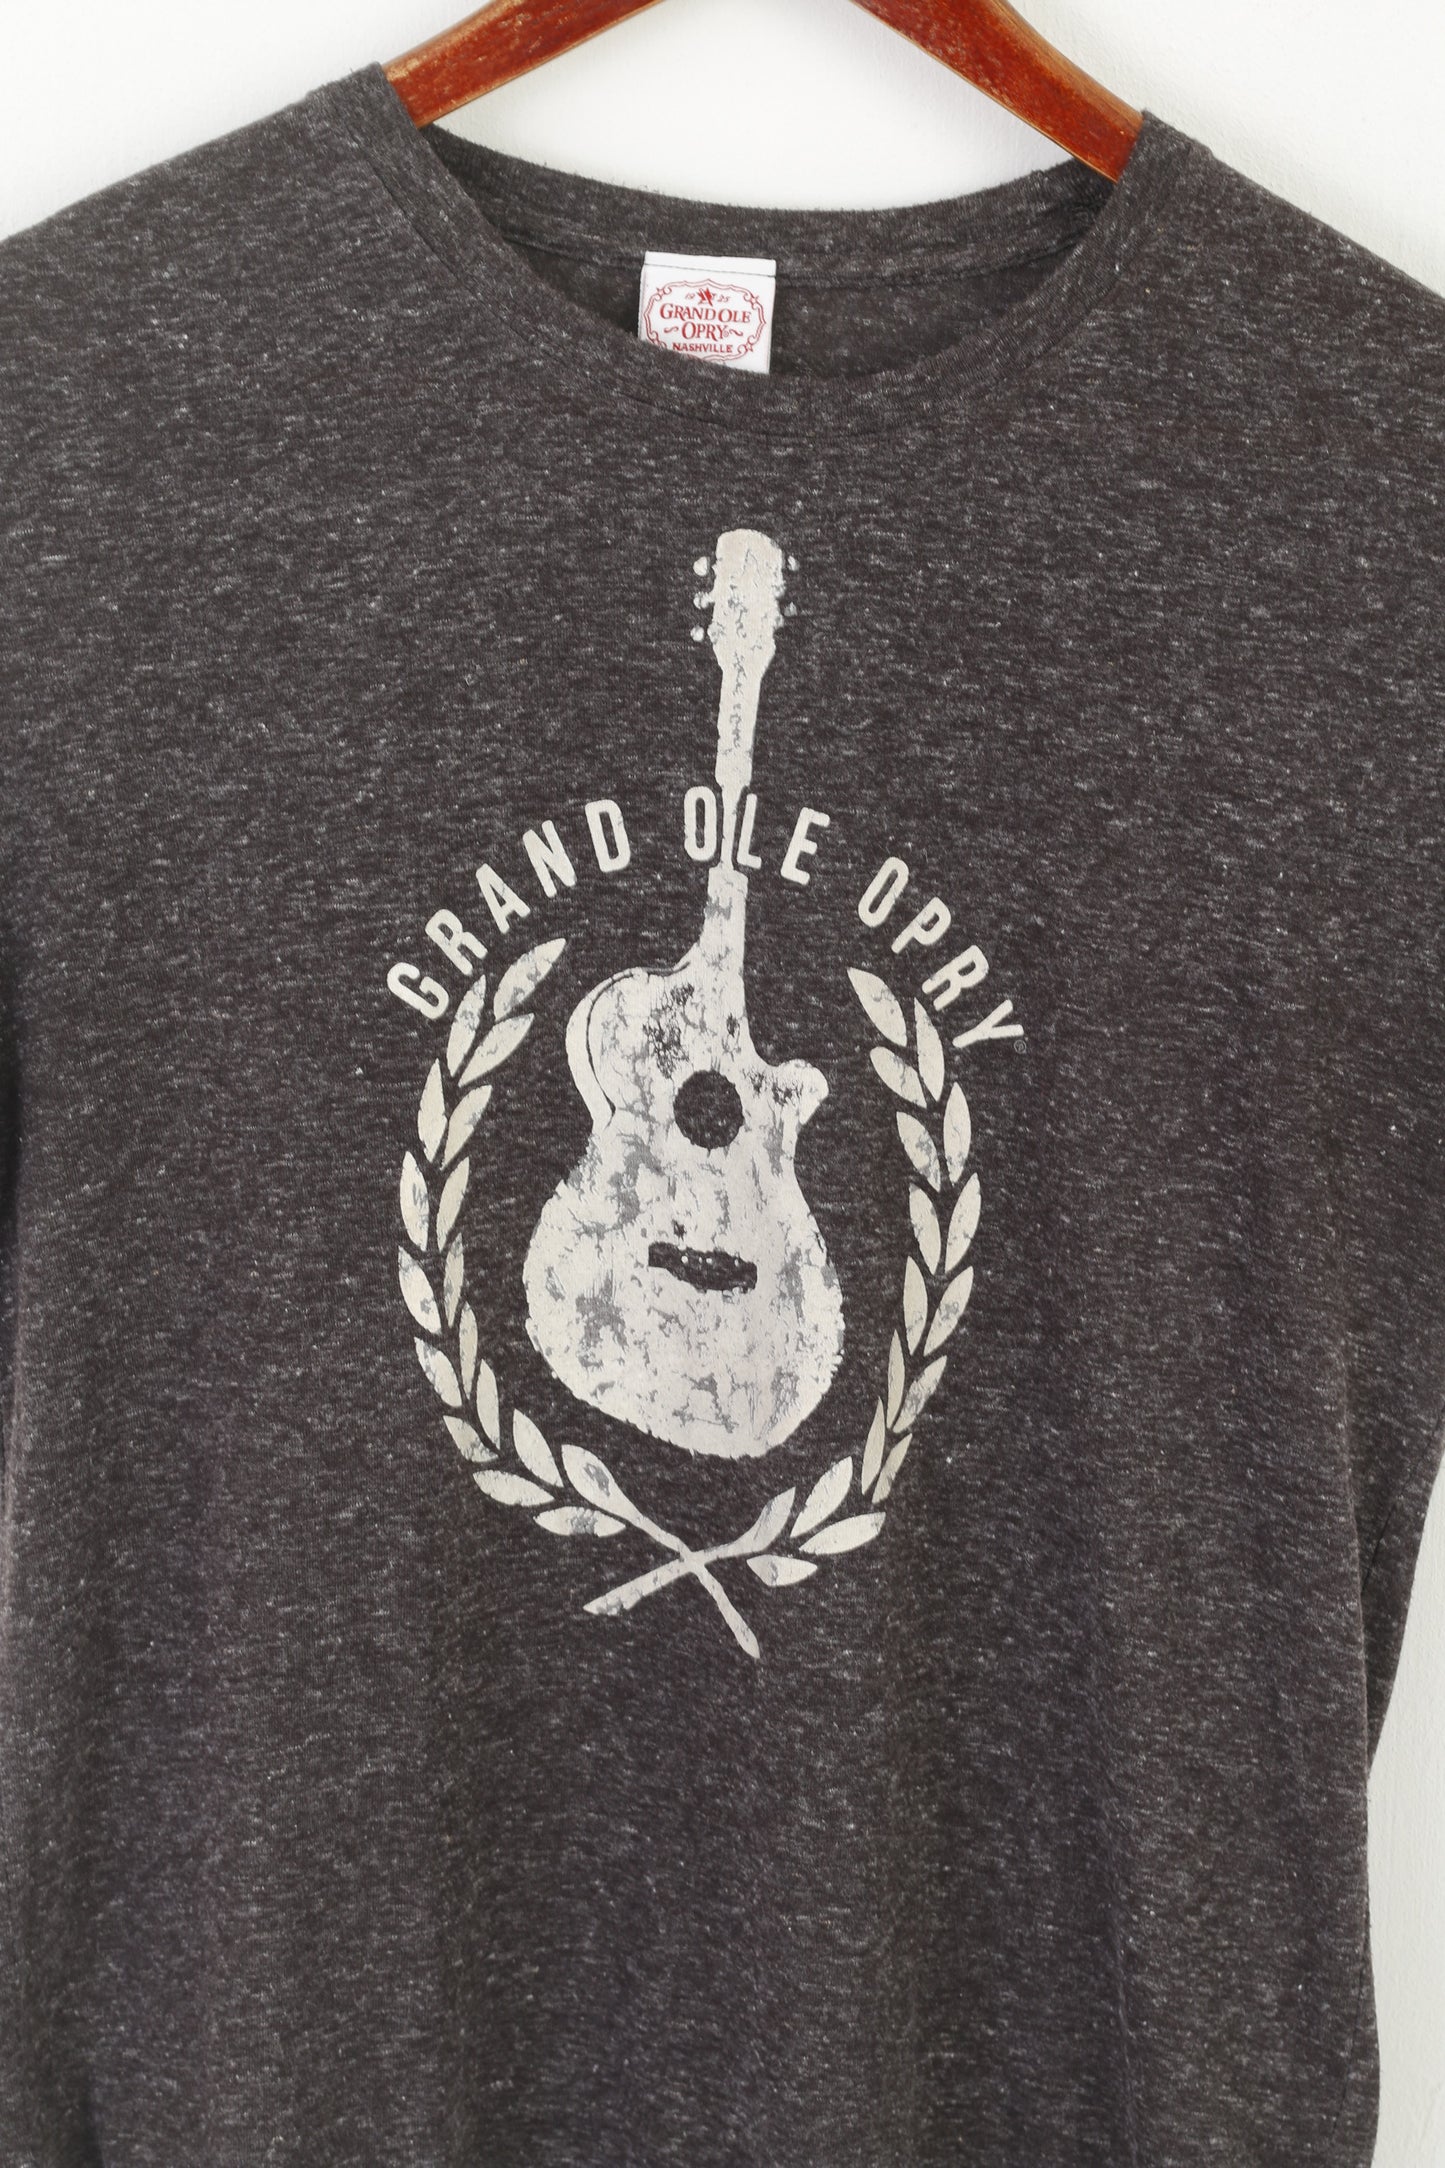 Grandole Nashville Women L T-Shirt Grey Cotton Graphic Grand Ole Opry Top